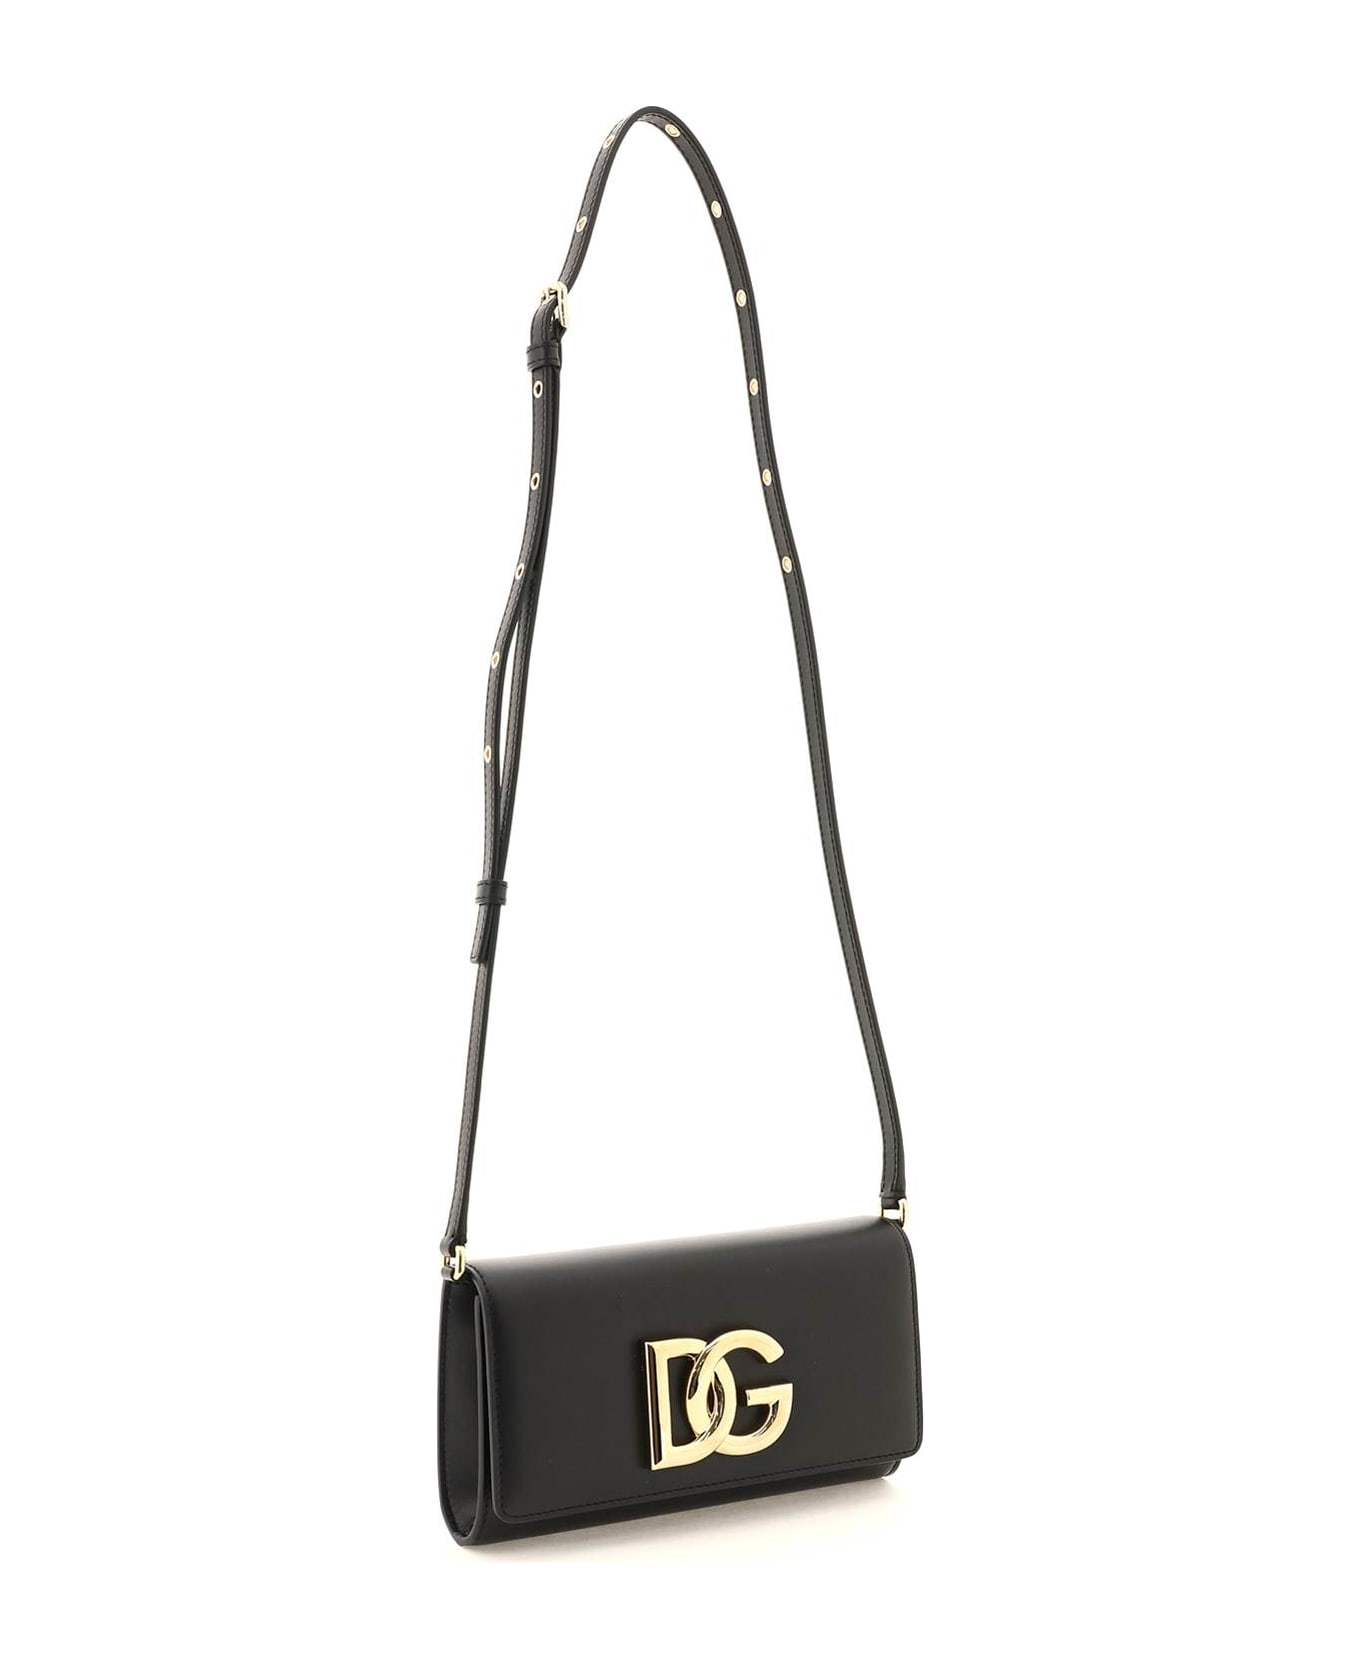 Dolce & Gabbana 3.5 Leather Clutch - Black